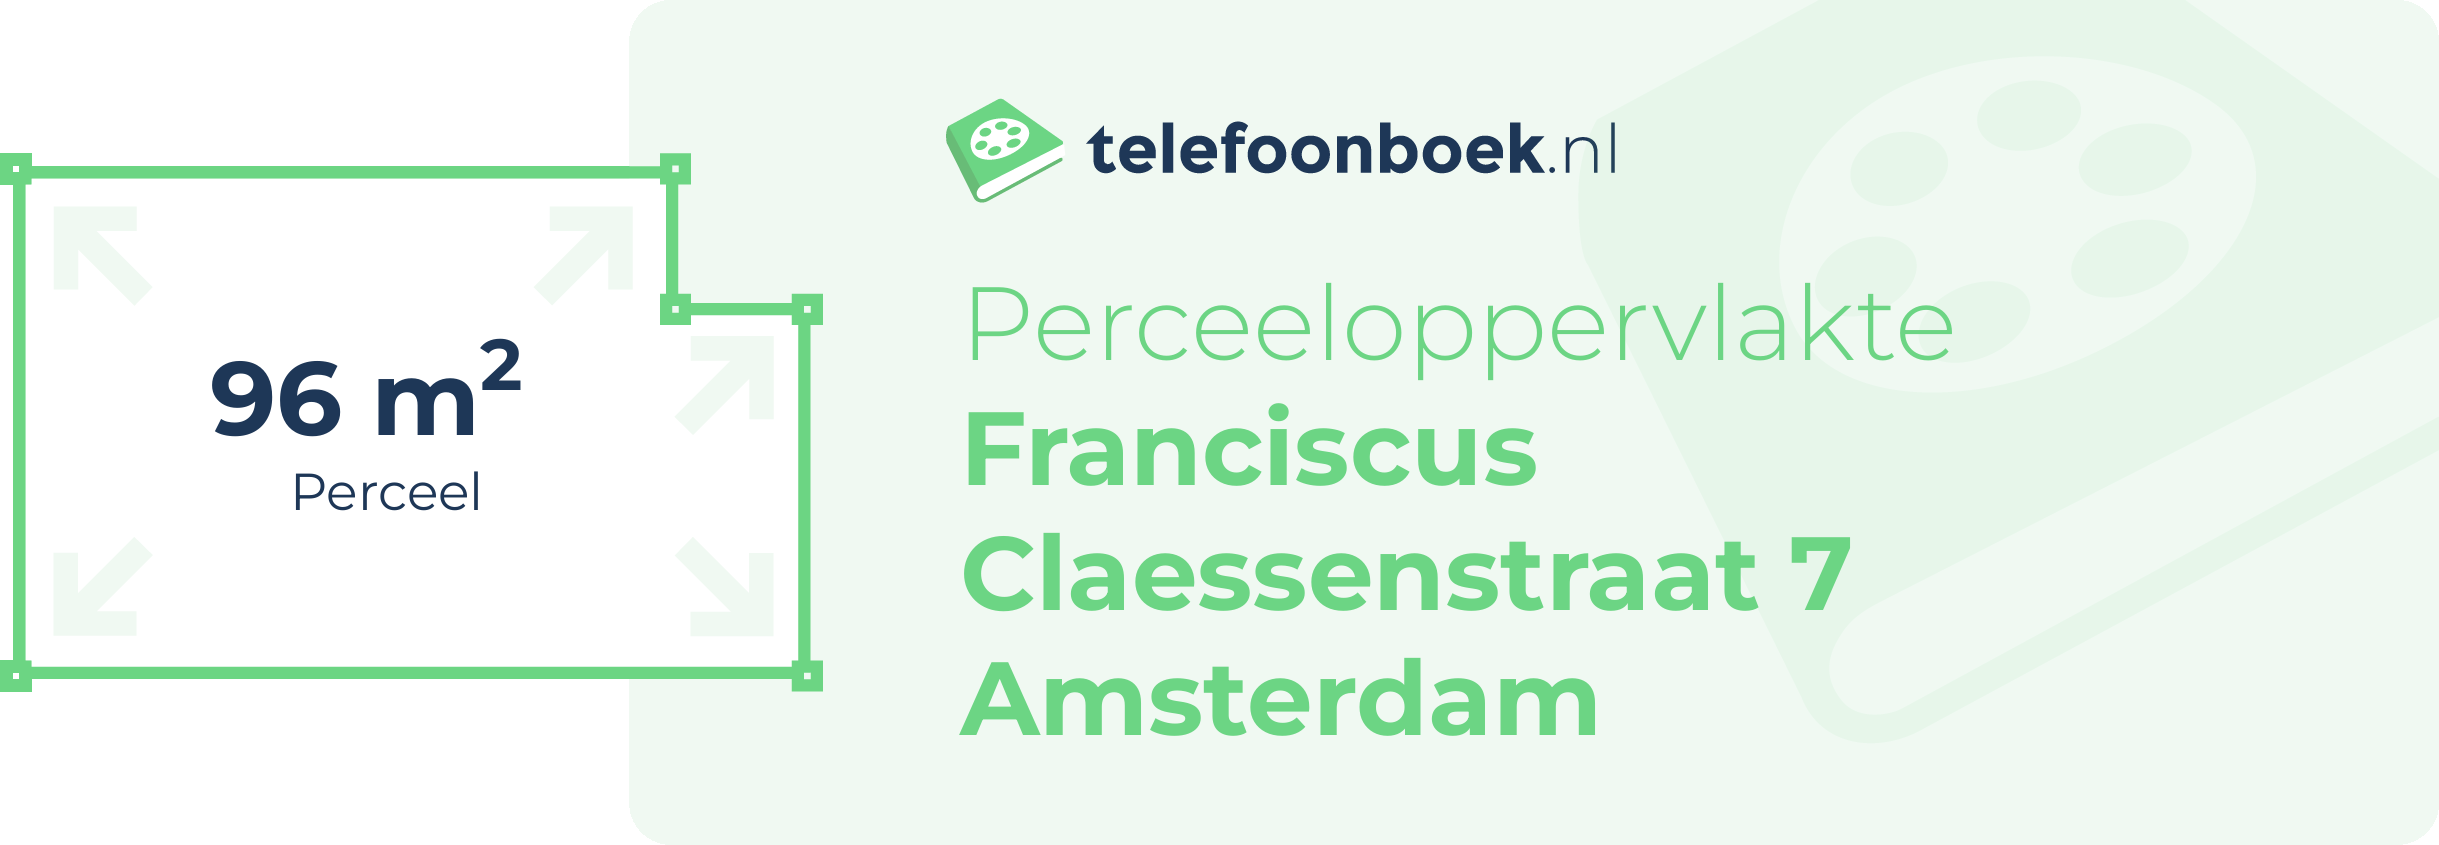 Perceeloppervlakte Franciscus Claessenstraat 7 Amsterdam